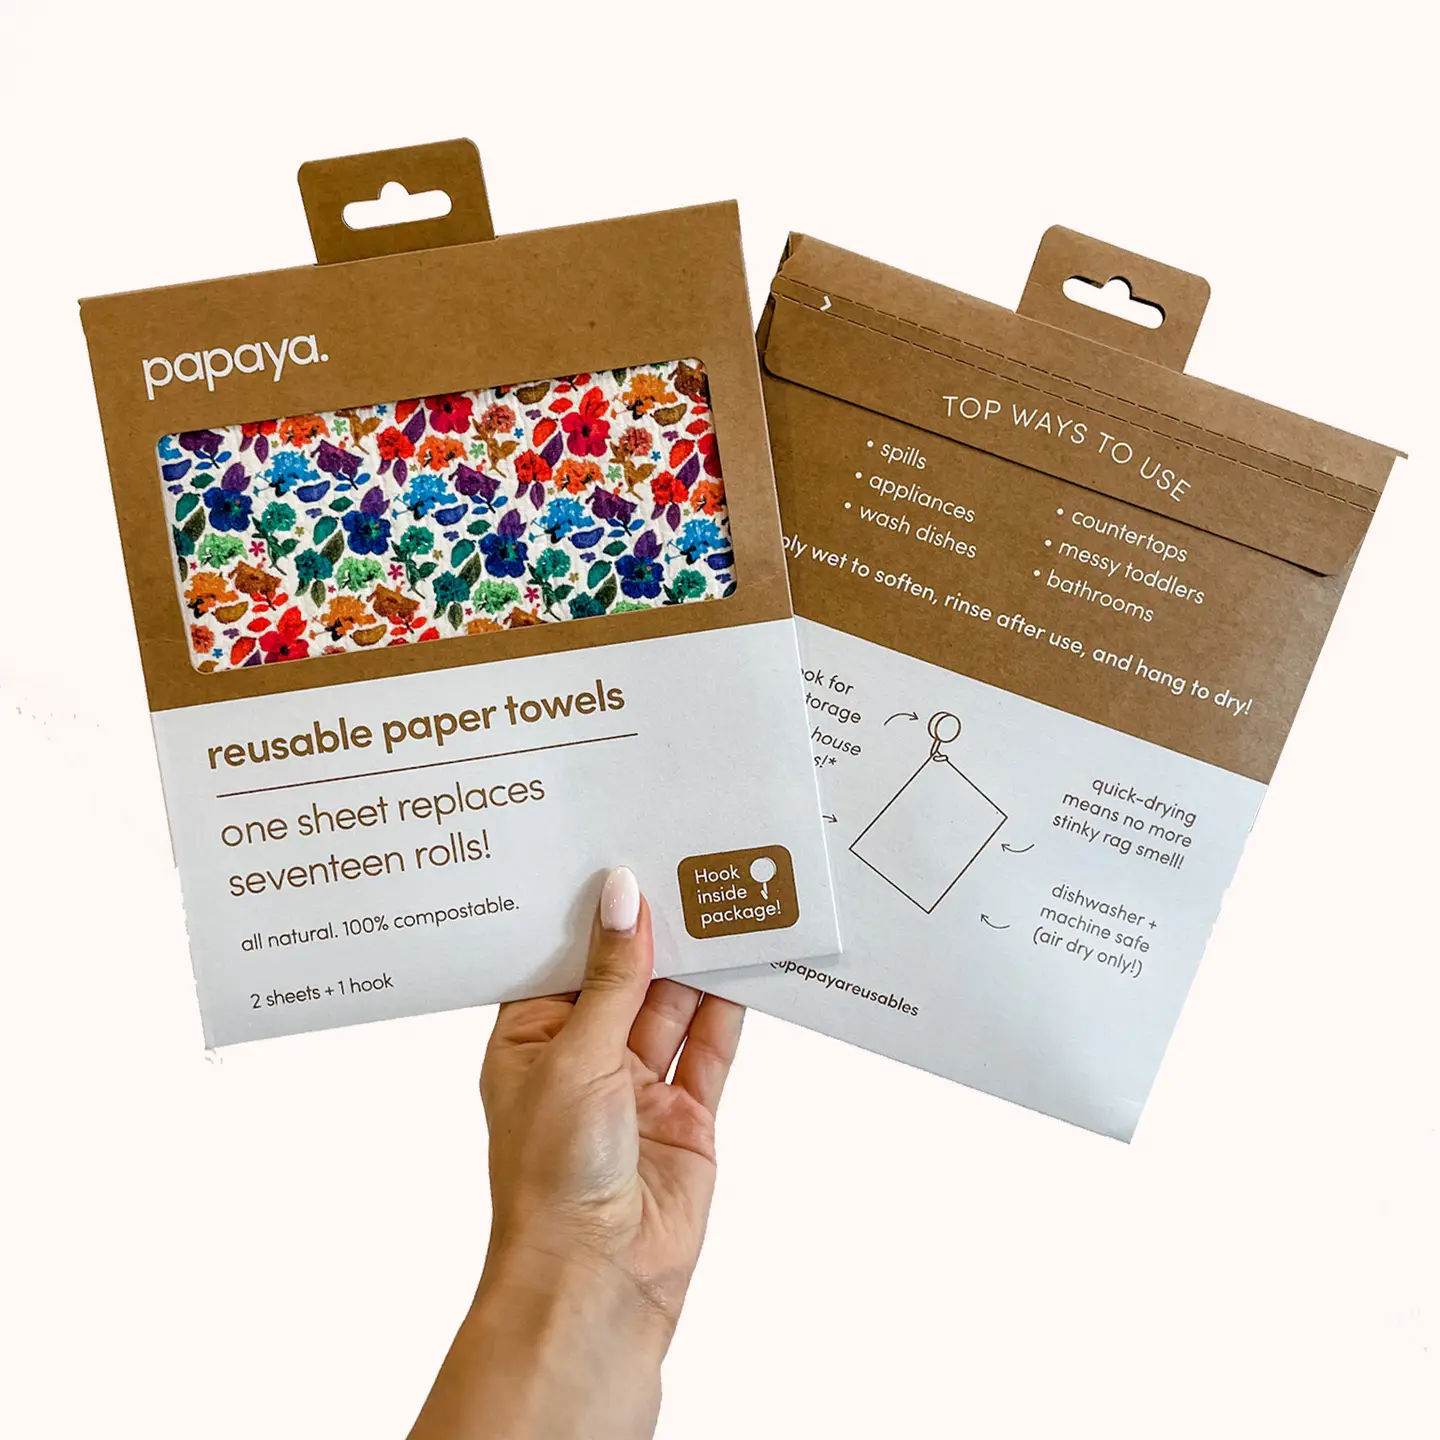 Papaya Reusable Paper Towel packaging